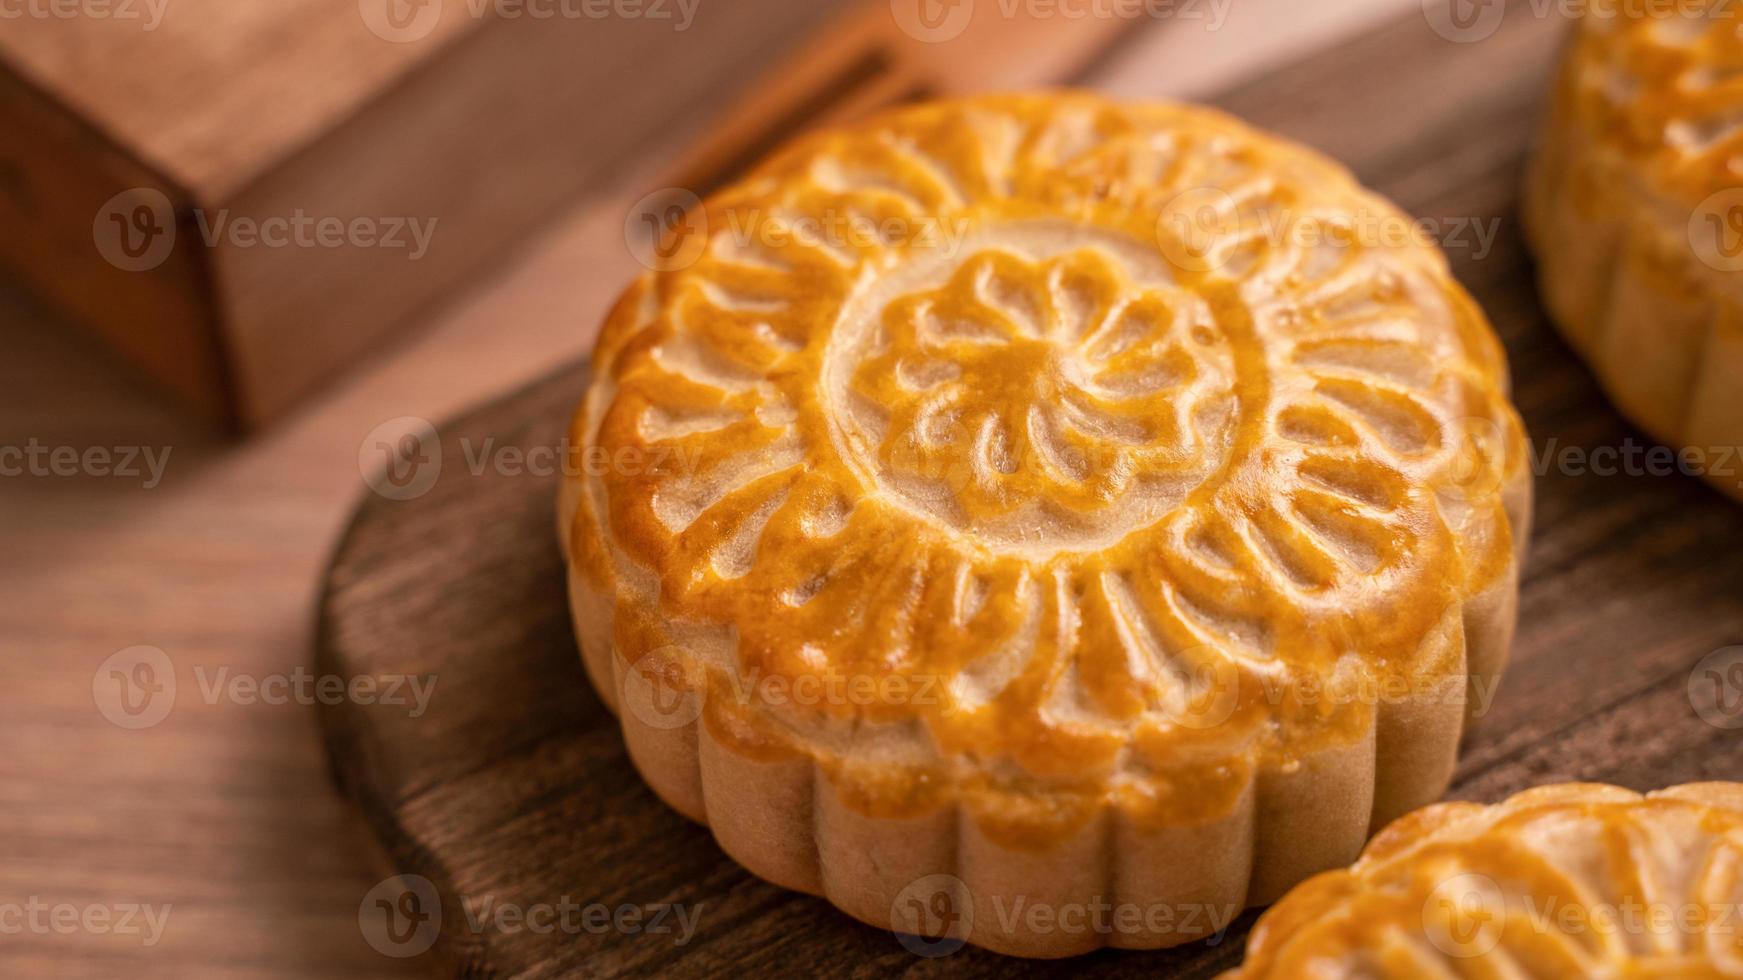 ronde vormige vers gebakken maan cake gebak - chinese moonckae voor mid-herfst maan festival op houten achtergrond en dienblad, close-up, kopieer ruimte foto